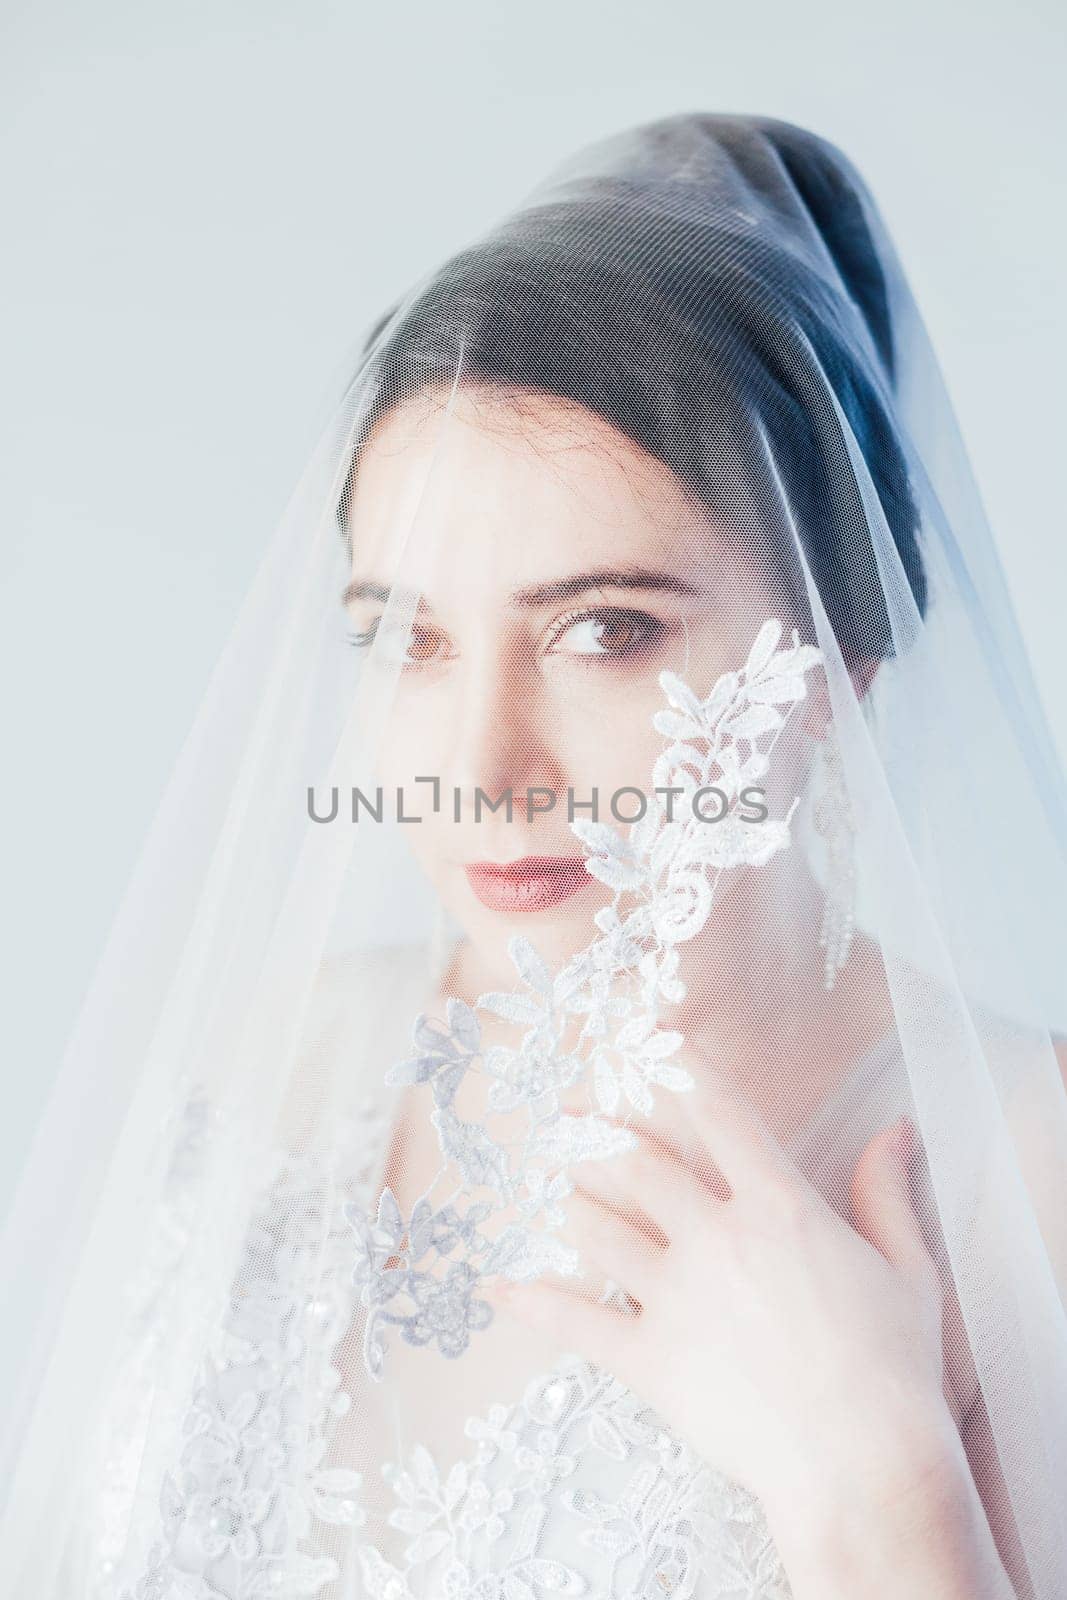 Portrait of a bride in a wedding dress veils